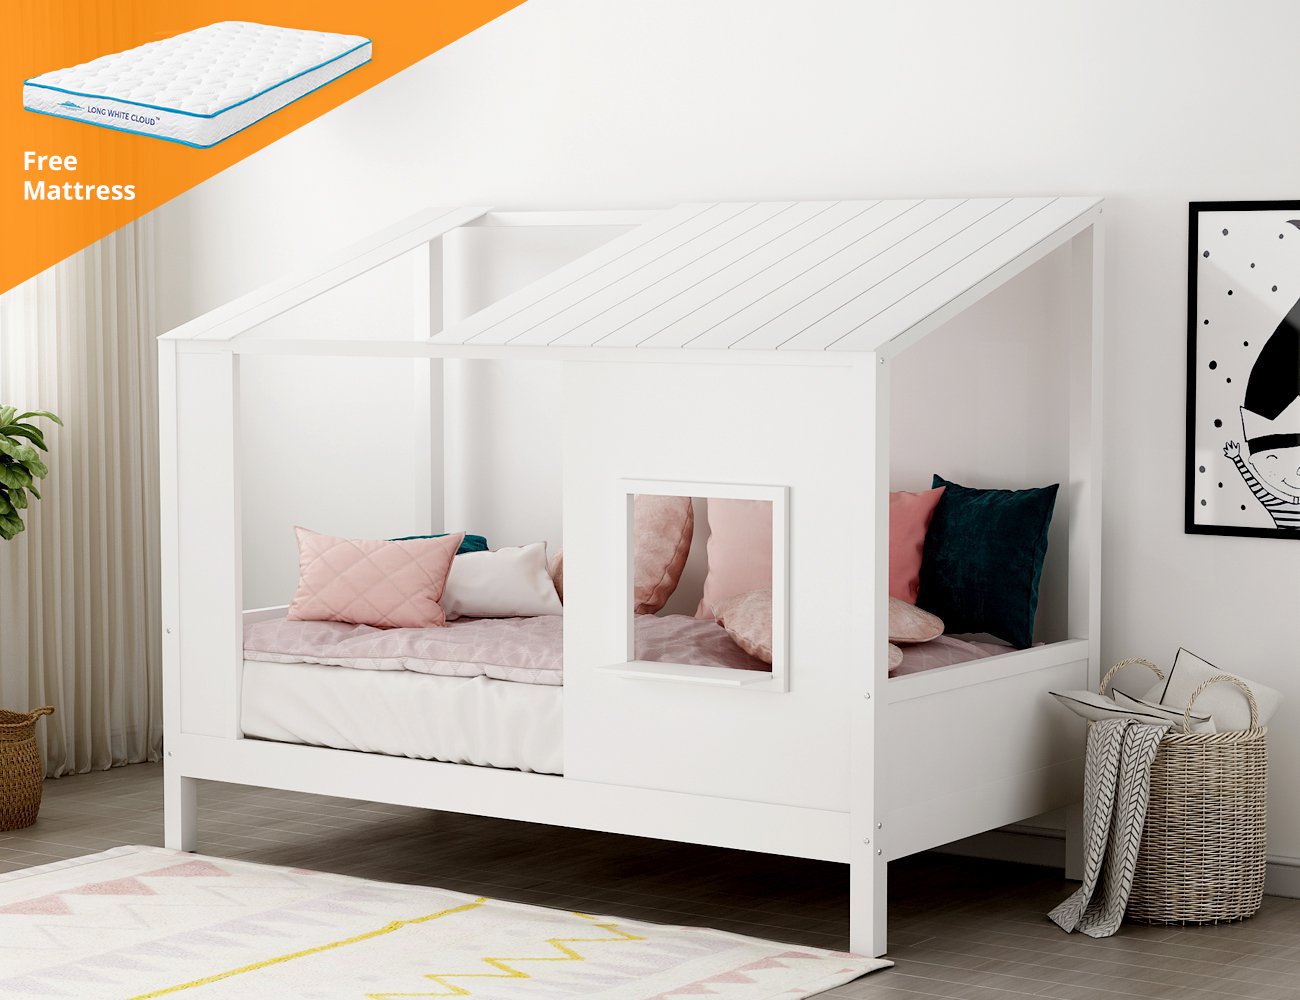 Jiro Kids King Single Bed Frame + Mattress Set @ Crazy Sales - We have